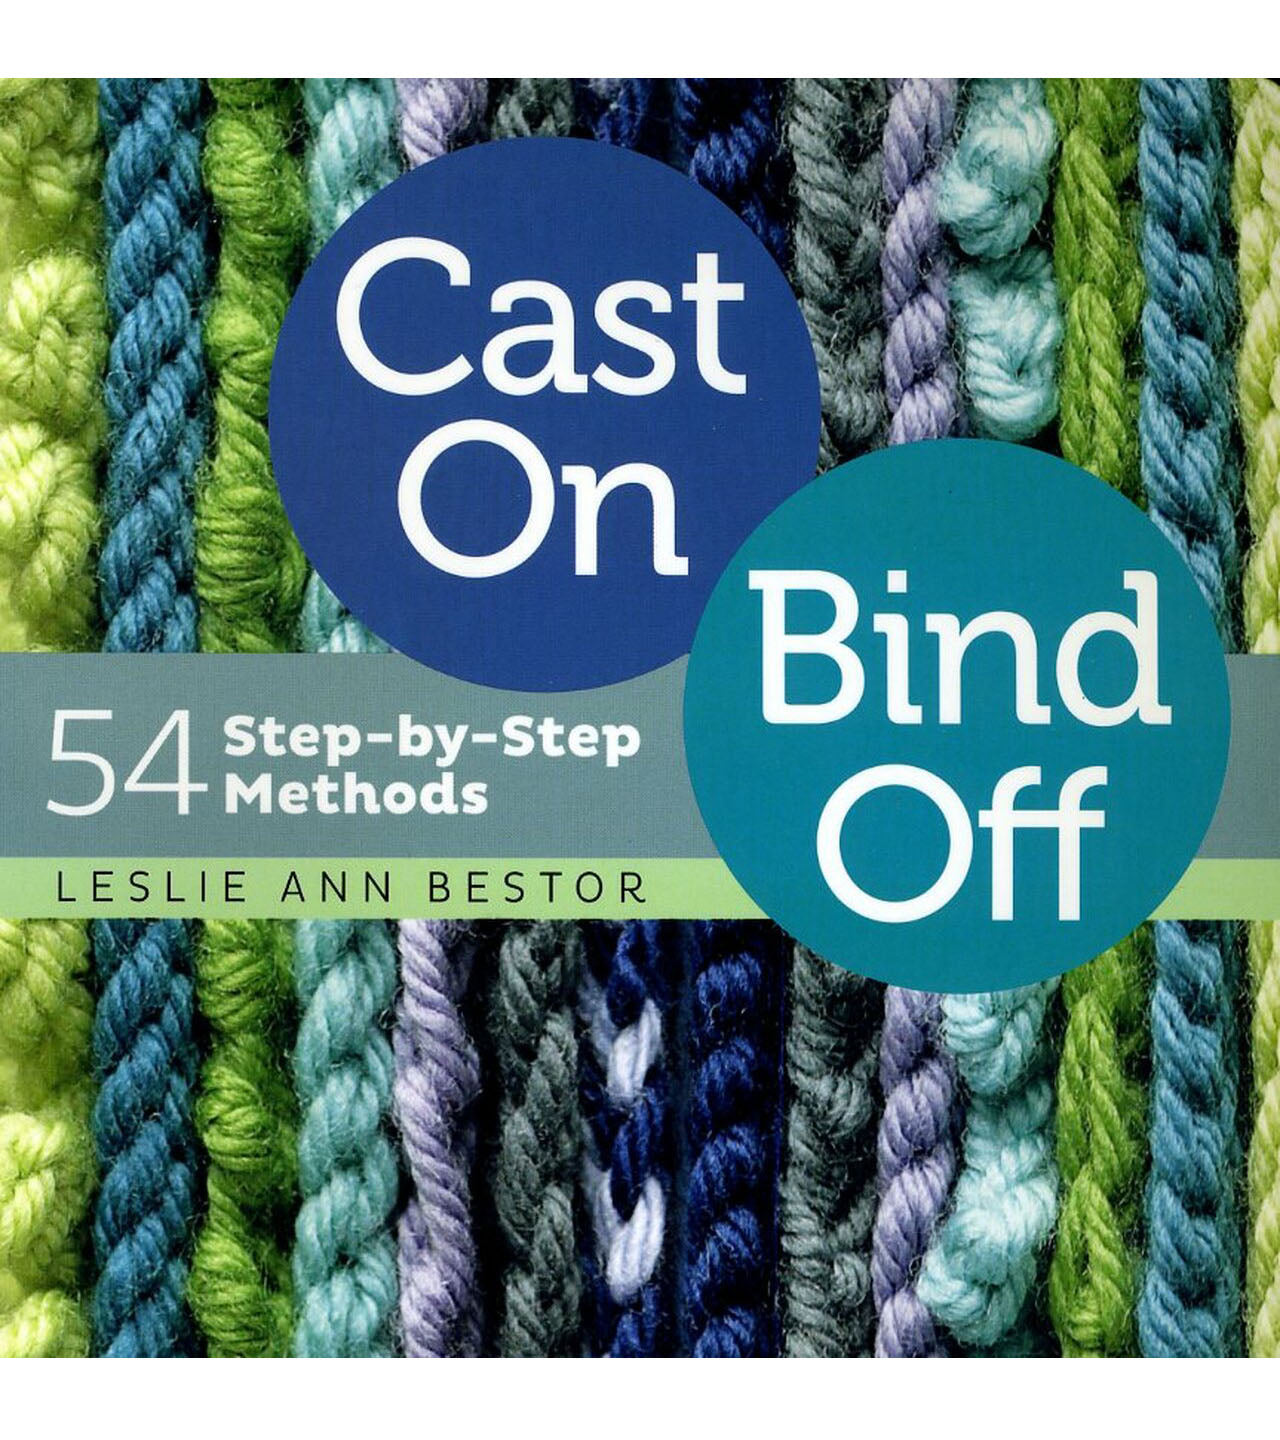 Cast On Bind Off (Leslie Ann Bestor)